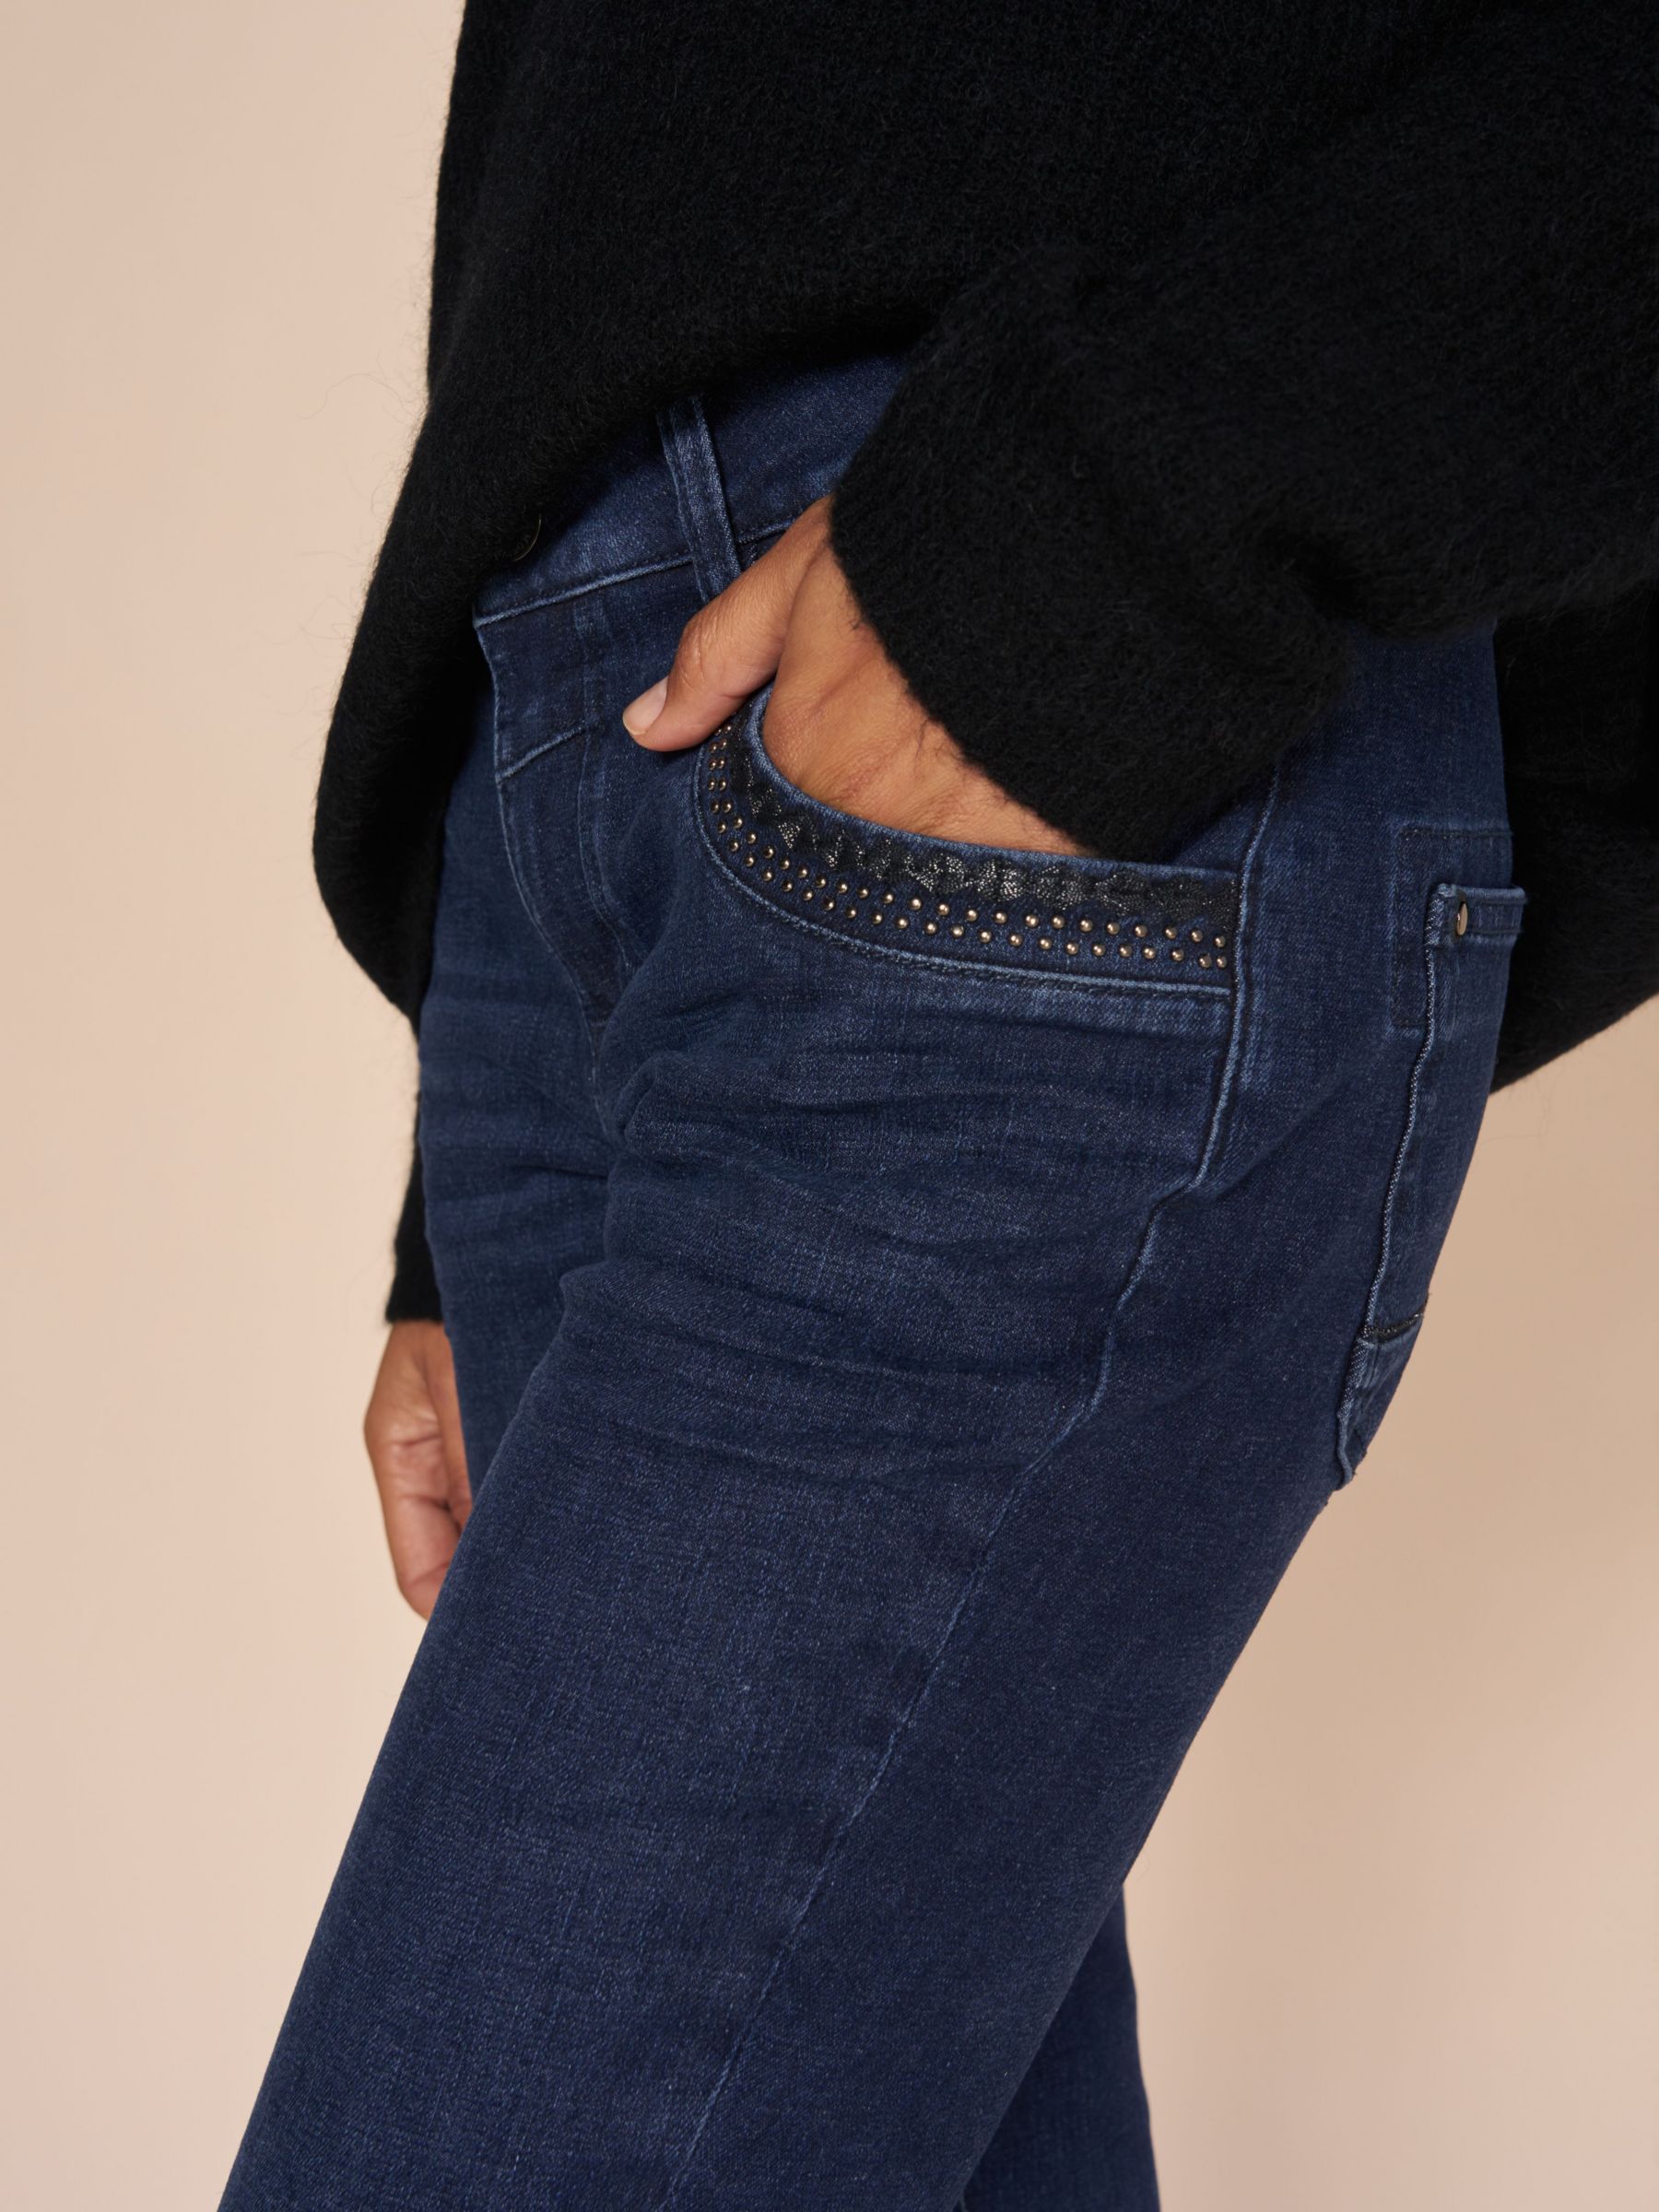 MOS MOSH Naomi Nola Mid Rise Regular Jeans, Dark Blue, 25R